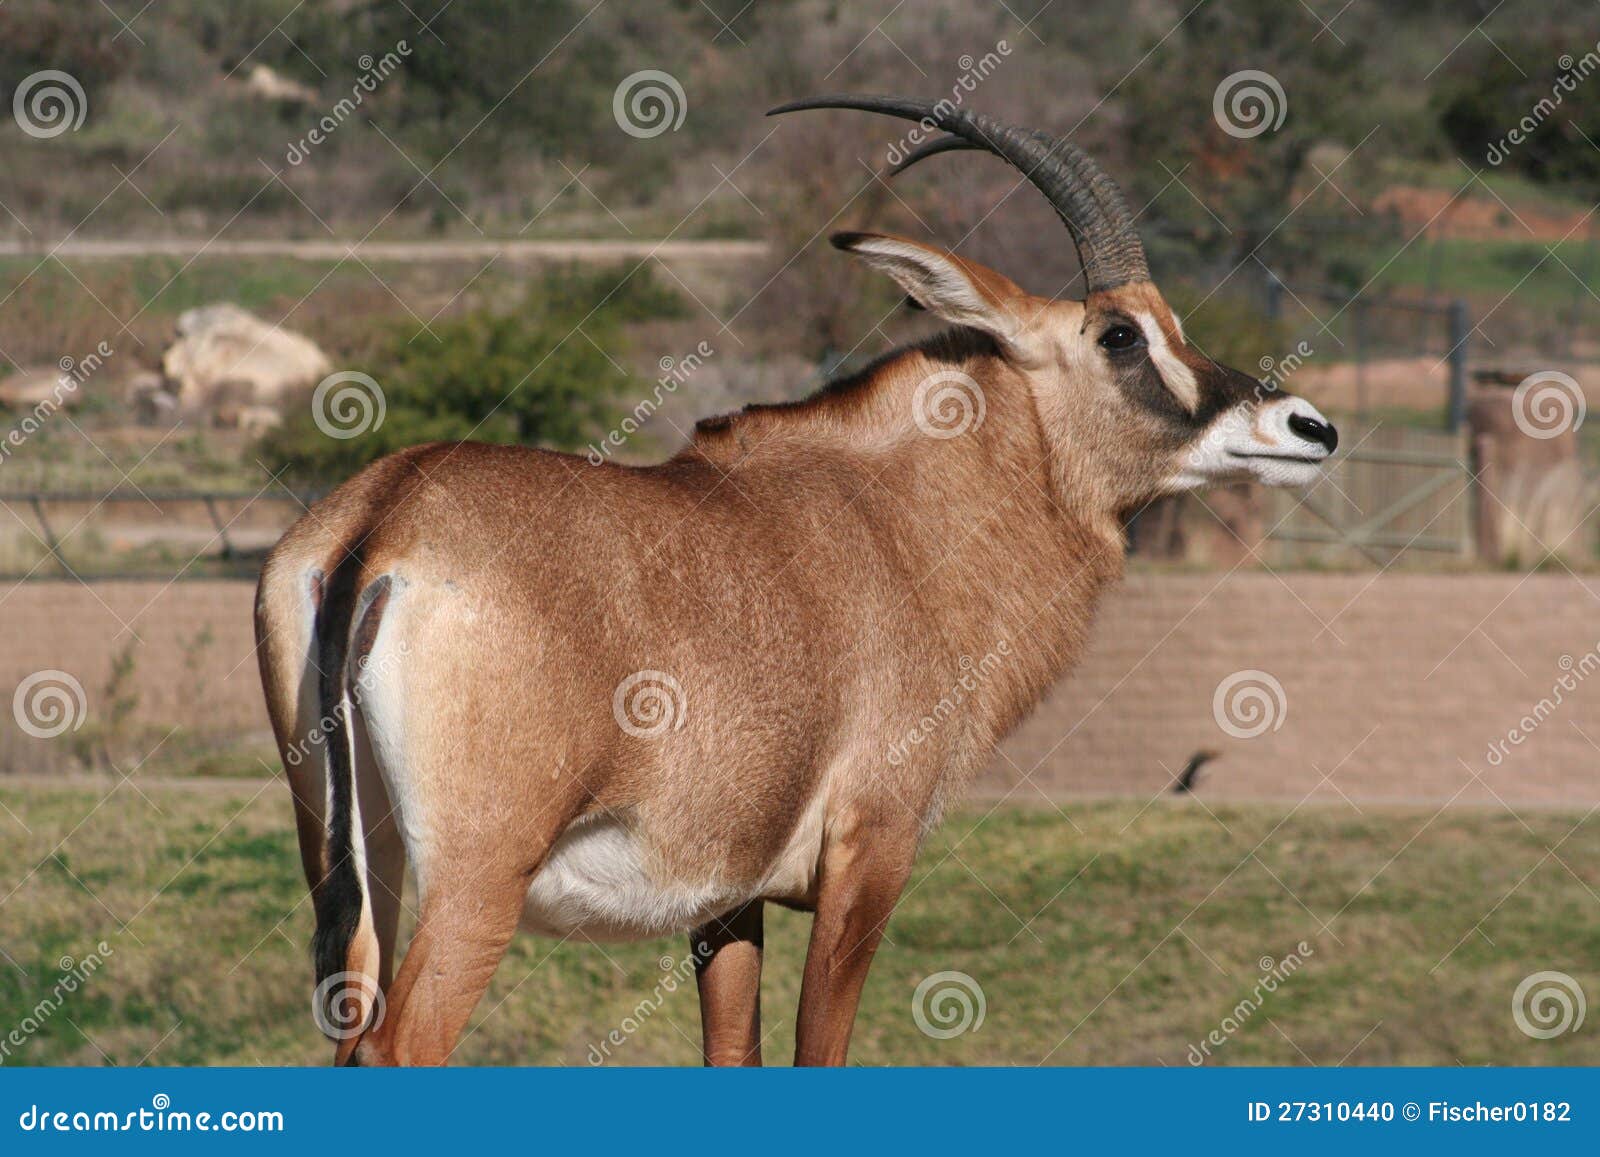 angolan roan antelope (hippotragus equinus cottoni